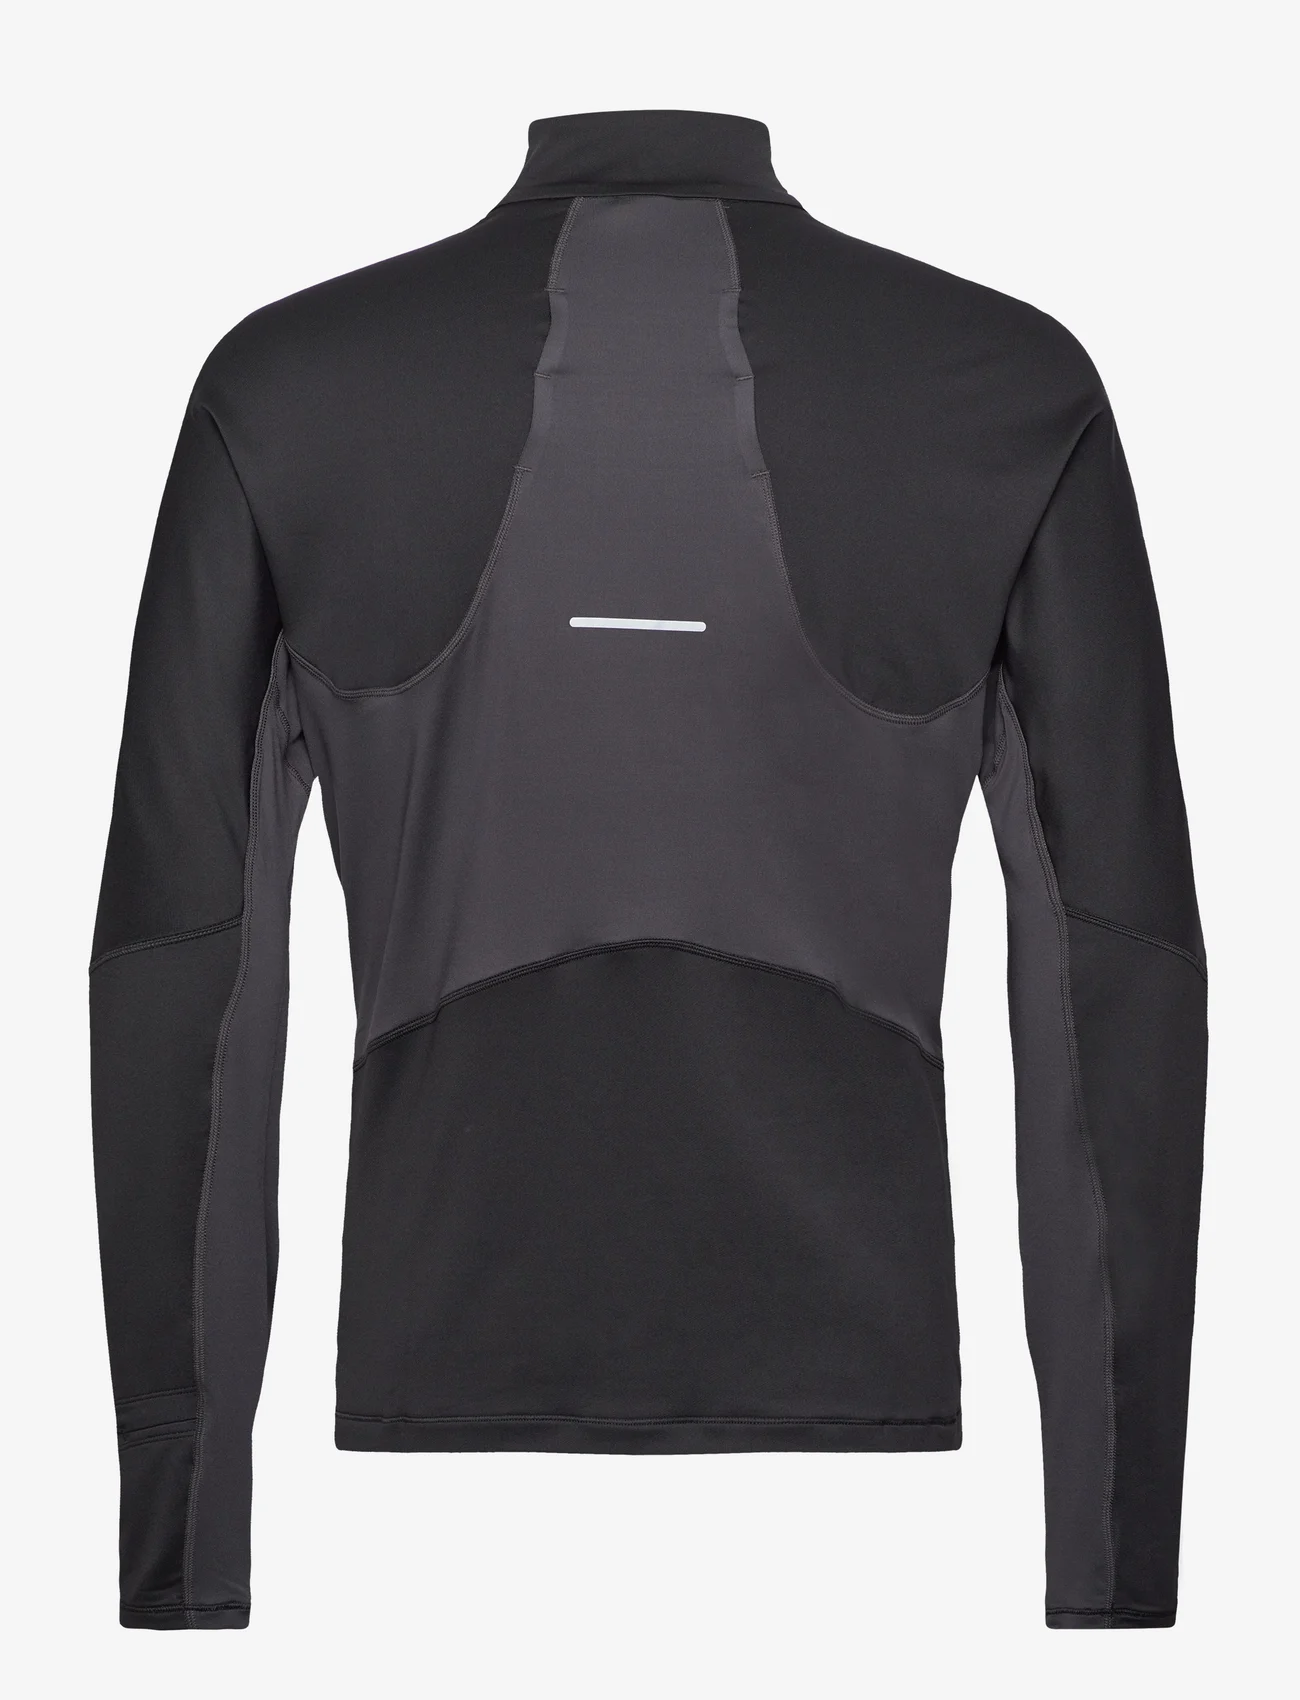 Asics - WINTER RUN 1/2 ZIP MID LAYER - mid layer jackets - performance black/graphite grey - 1